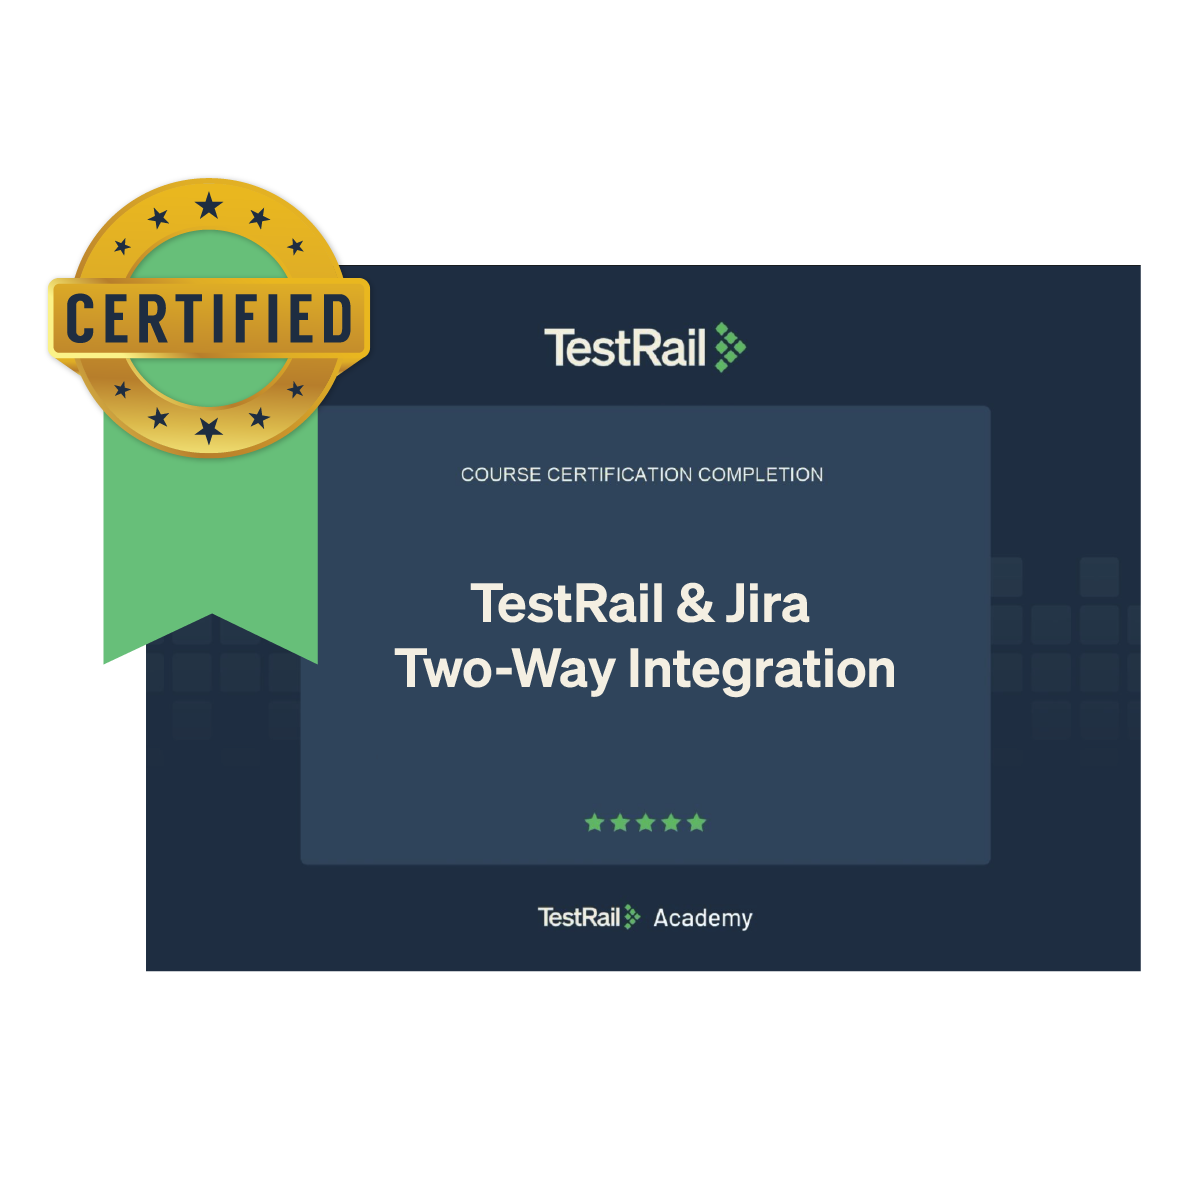 TestRail & Jira Two-way Integration